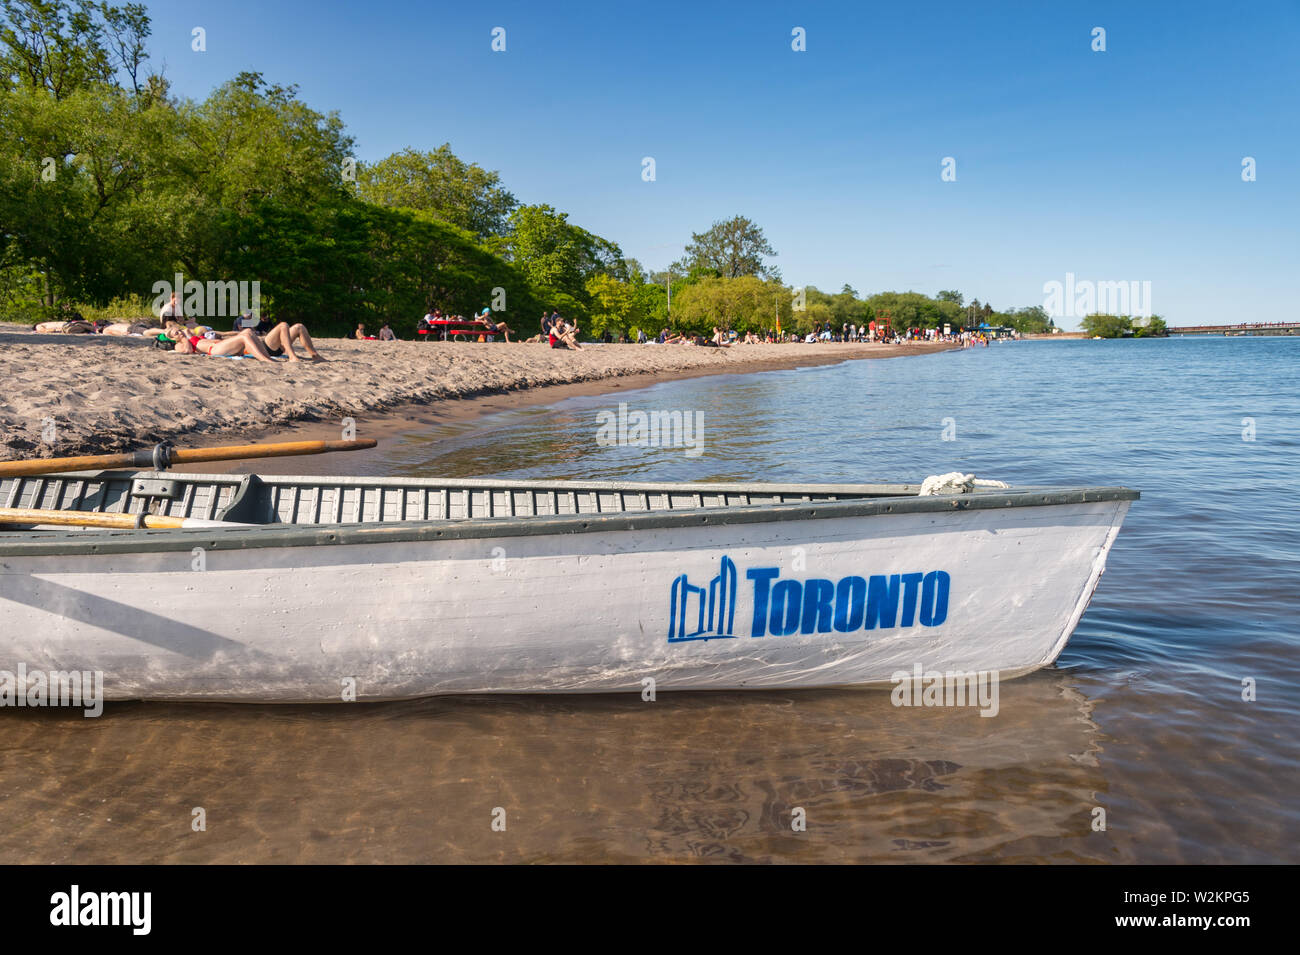 Toronto, CA - 23 June 2019: Small boat with Toronto city logo mooring at the Centre island beach. Stock Photo